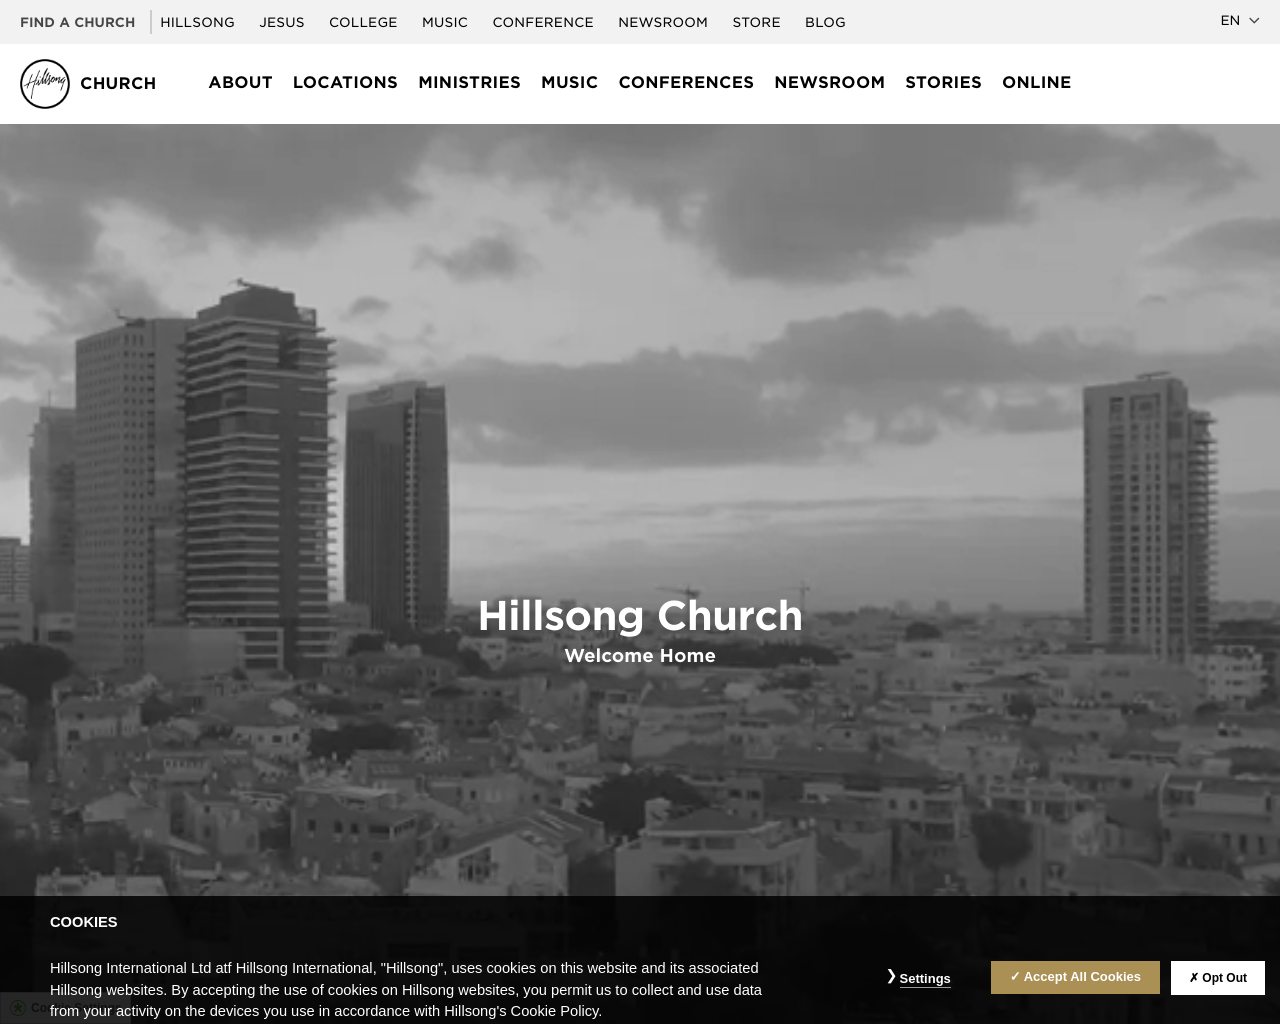 hillsong.com